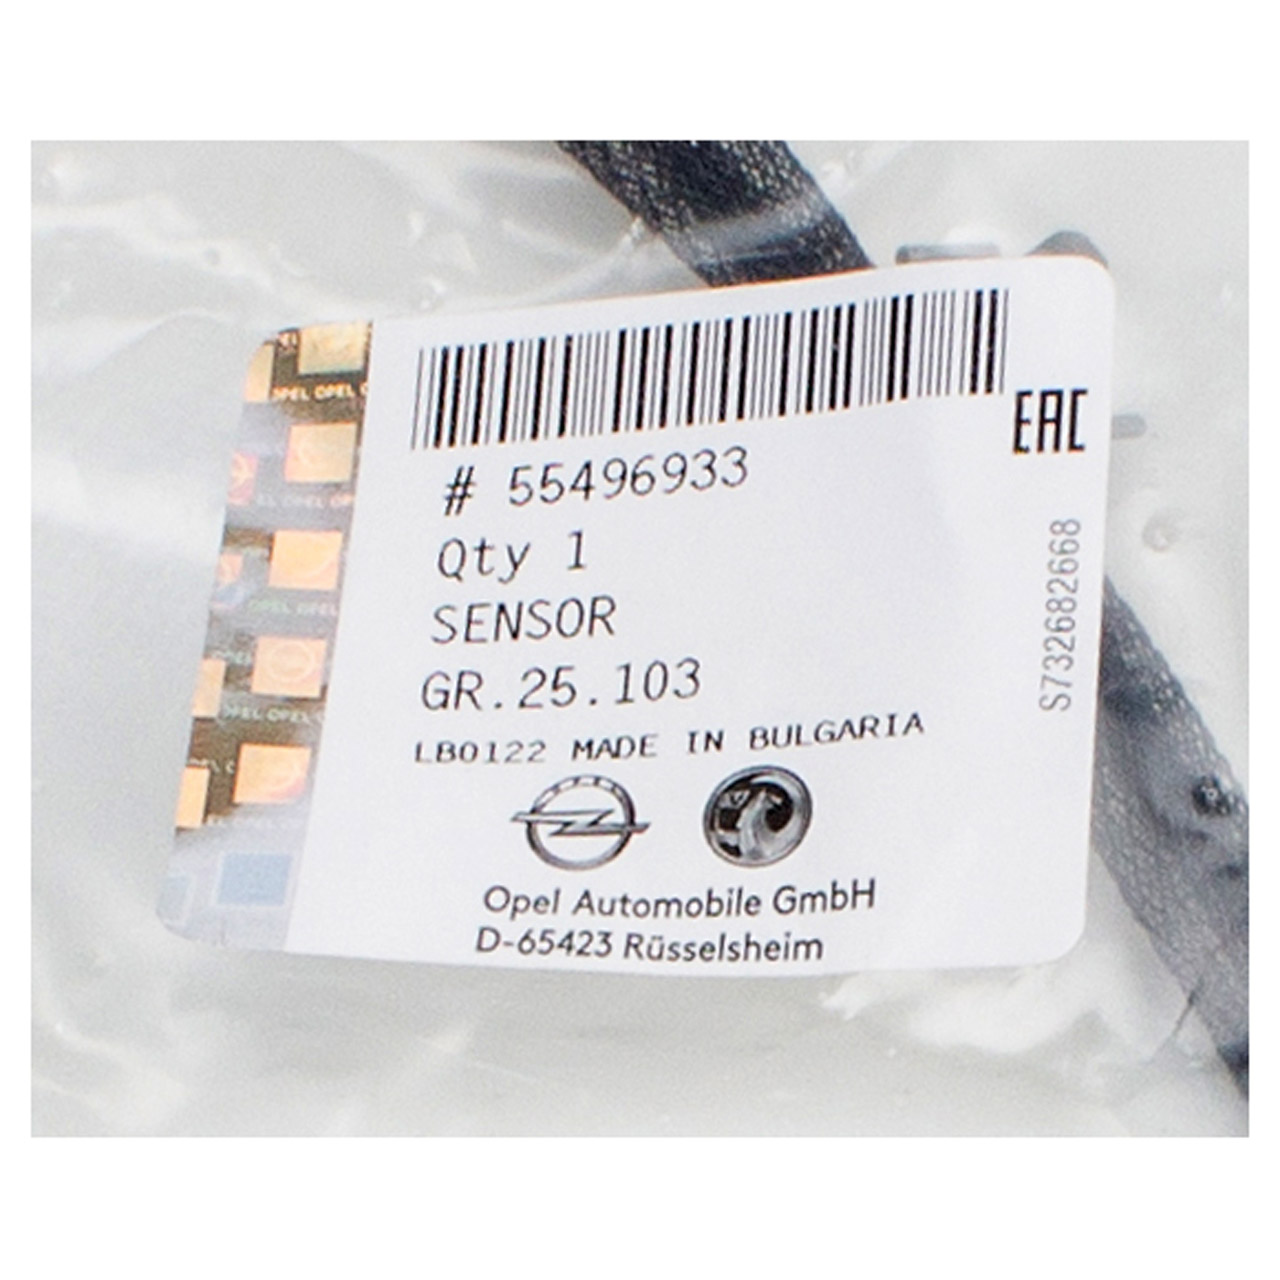 ORIGINAL Opel Abgastemperatursensor Pos. 2 Sensor Insignia A 2.0 CDTI 55496933